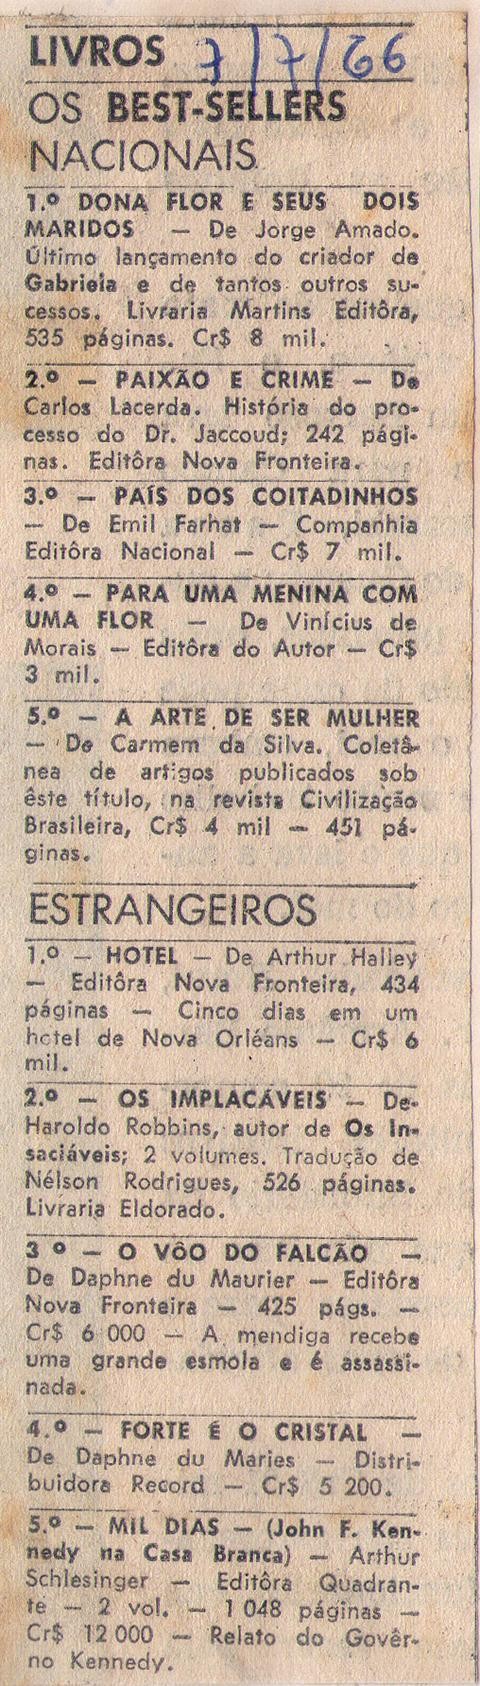 07 de Julho de 1966. Os best-sellers nacionais.